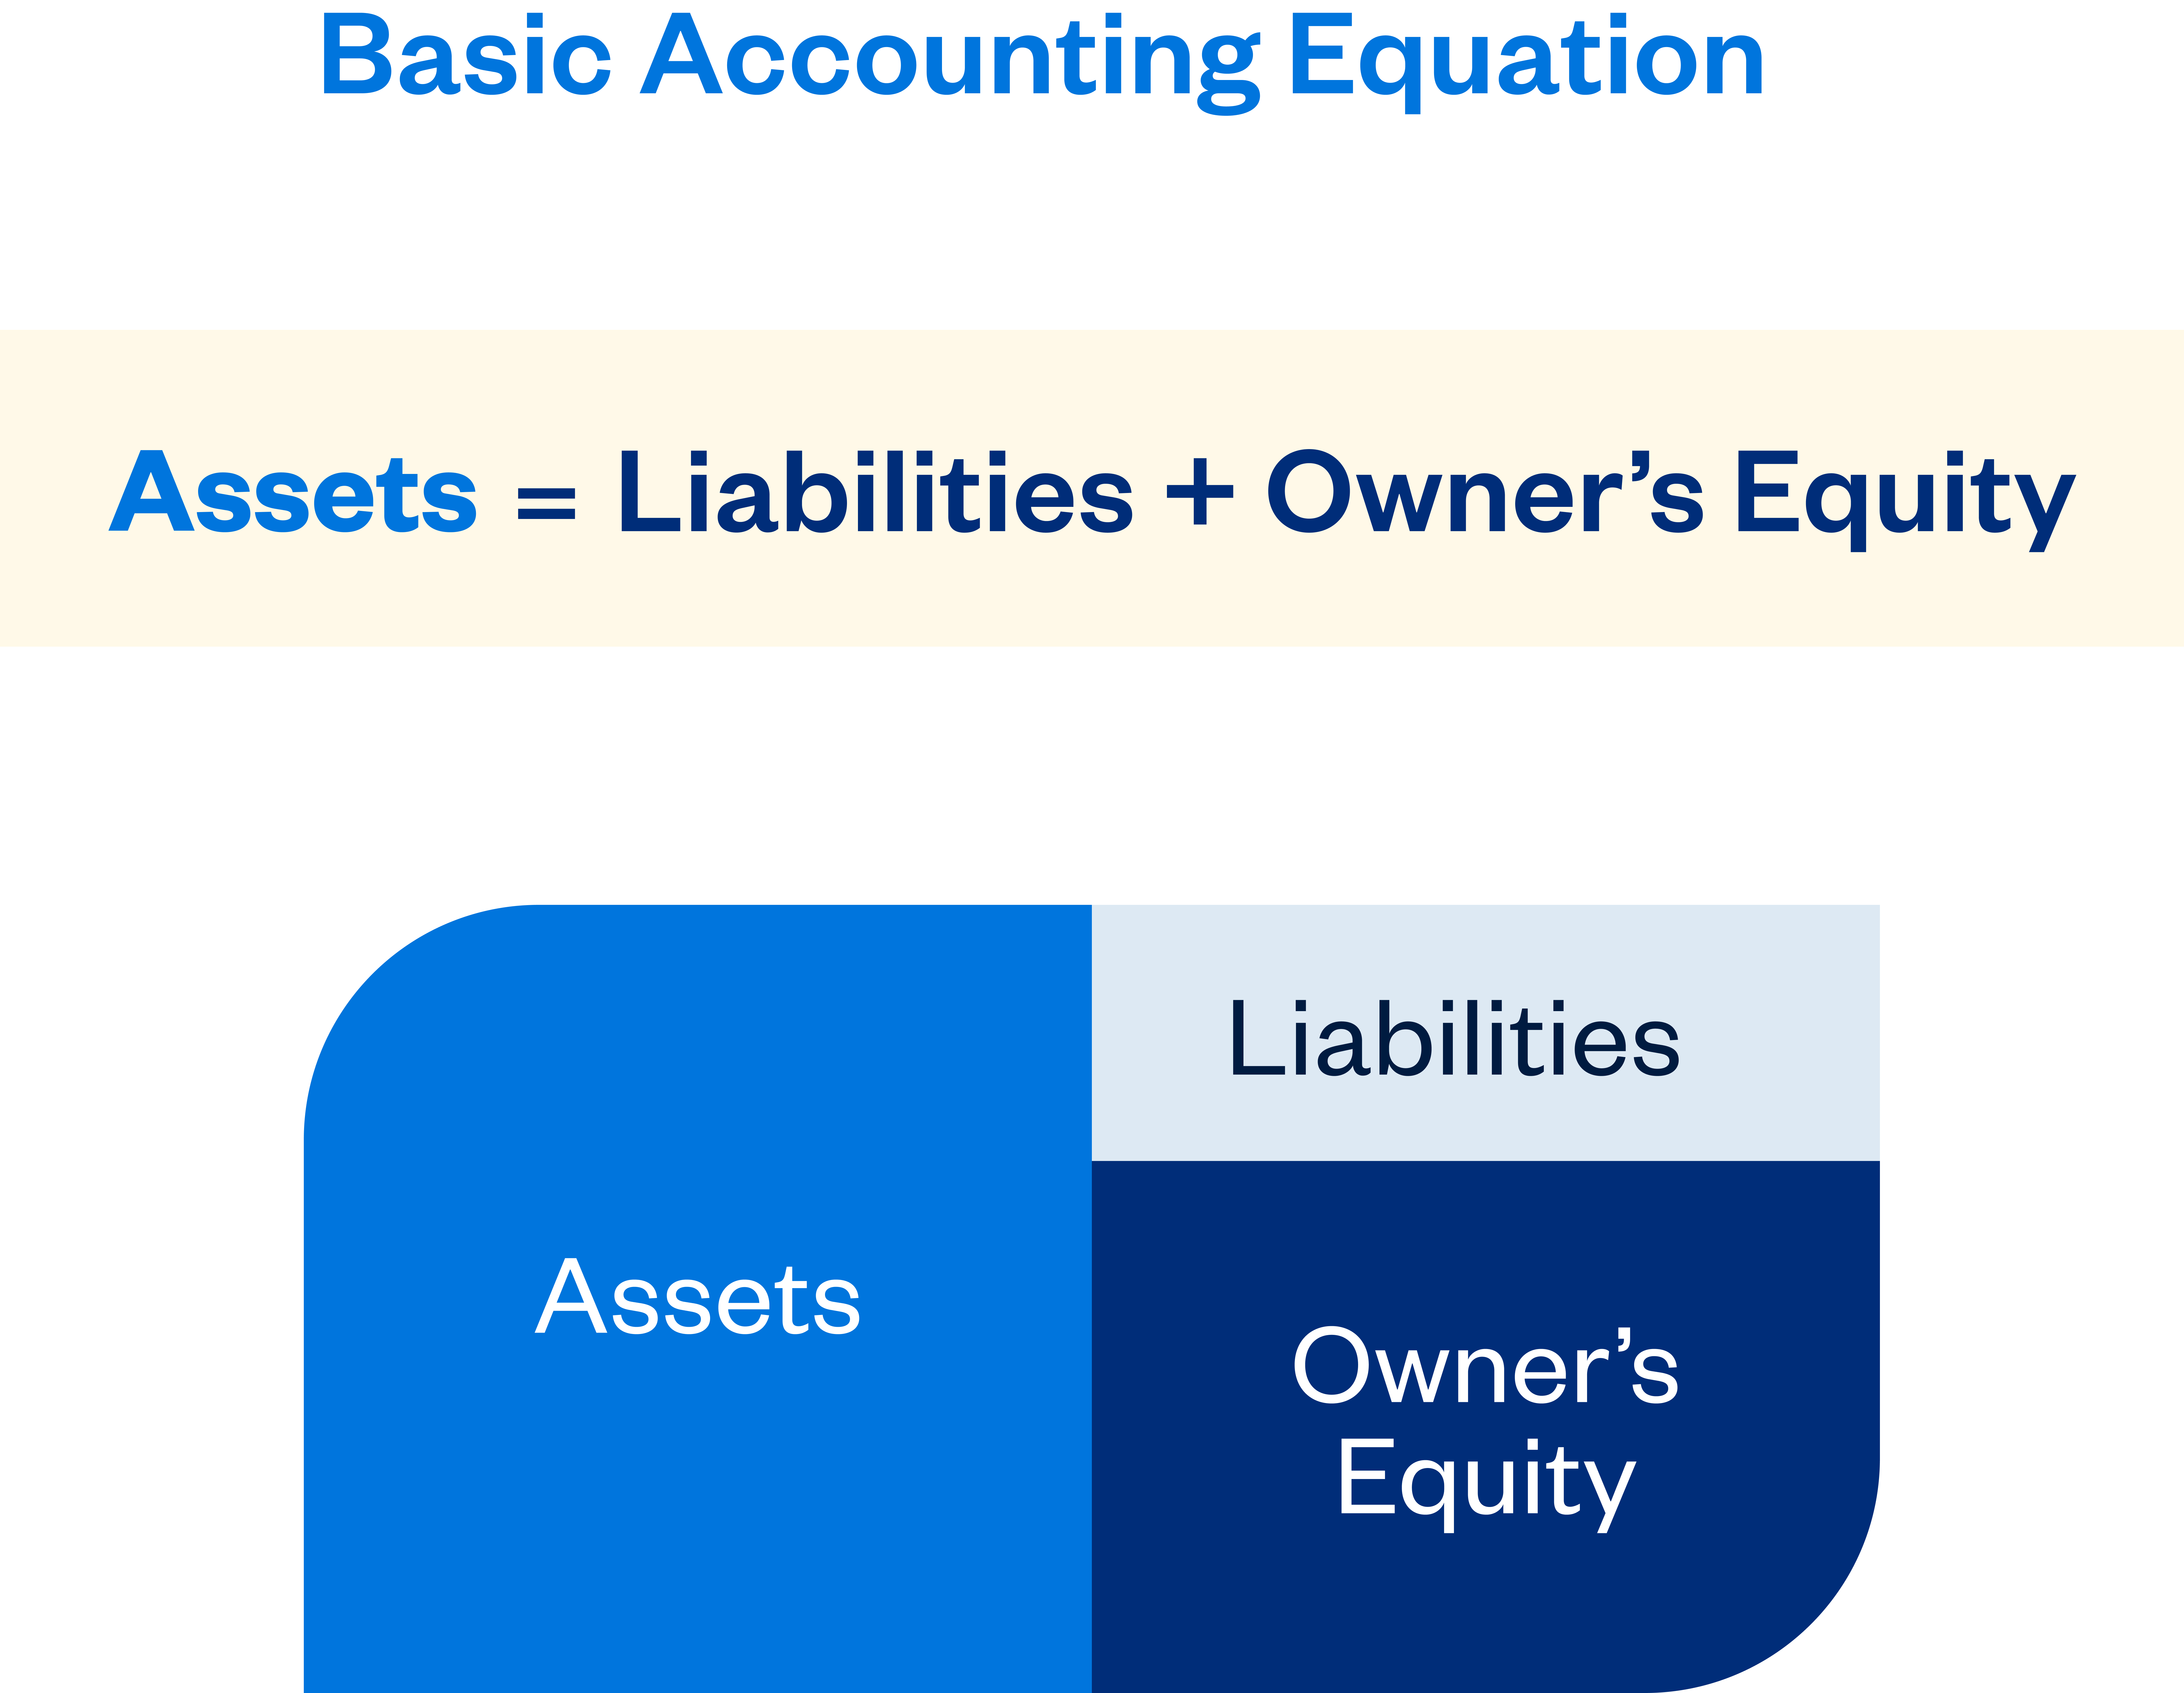 Illustration: Basic Accounting Equation